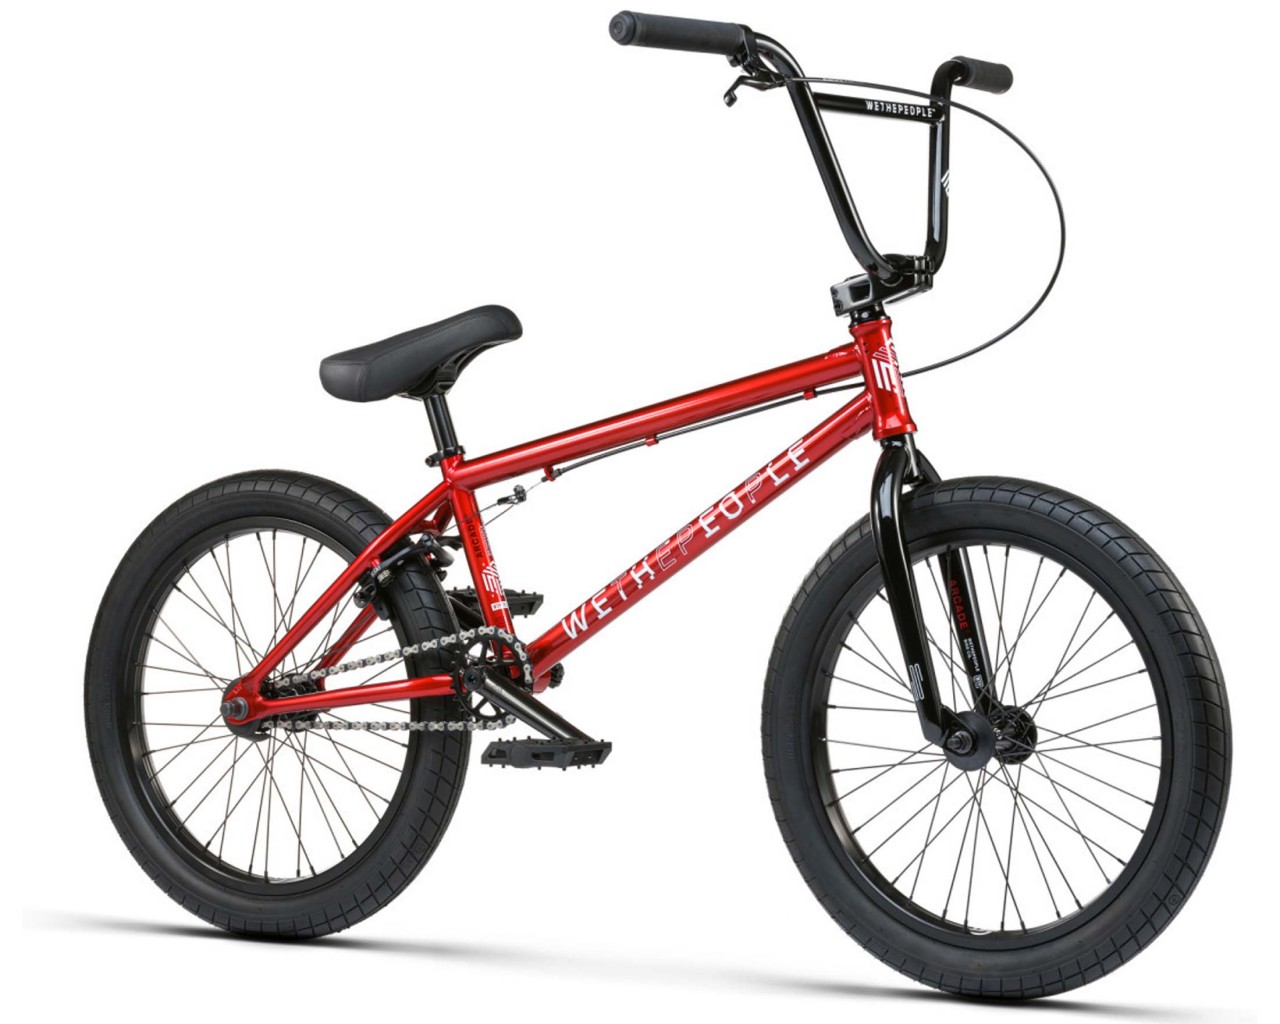 Wethepeople Arcade 20 inch - BMX Bike 2021 | candy red